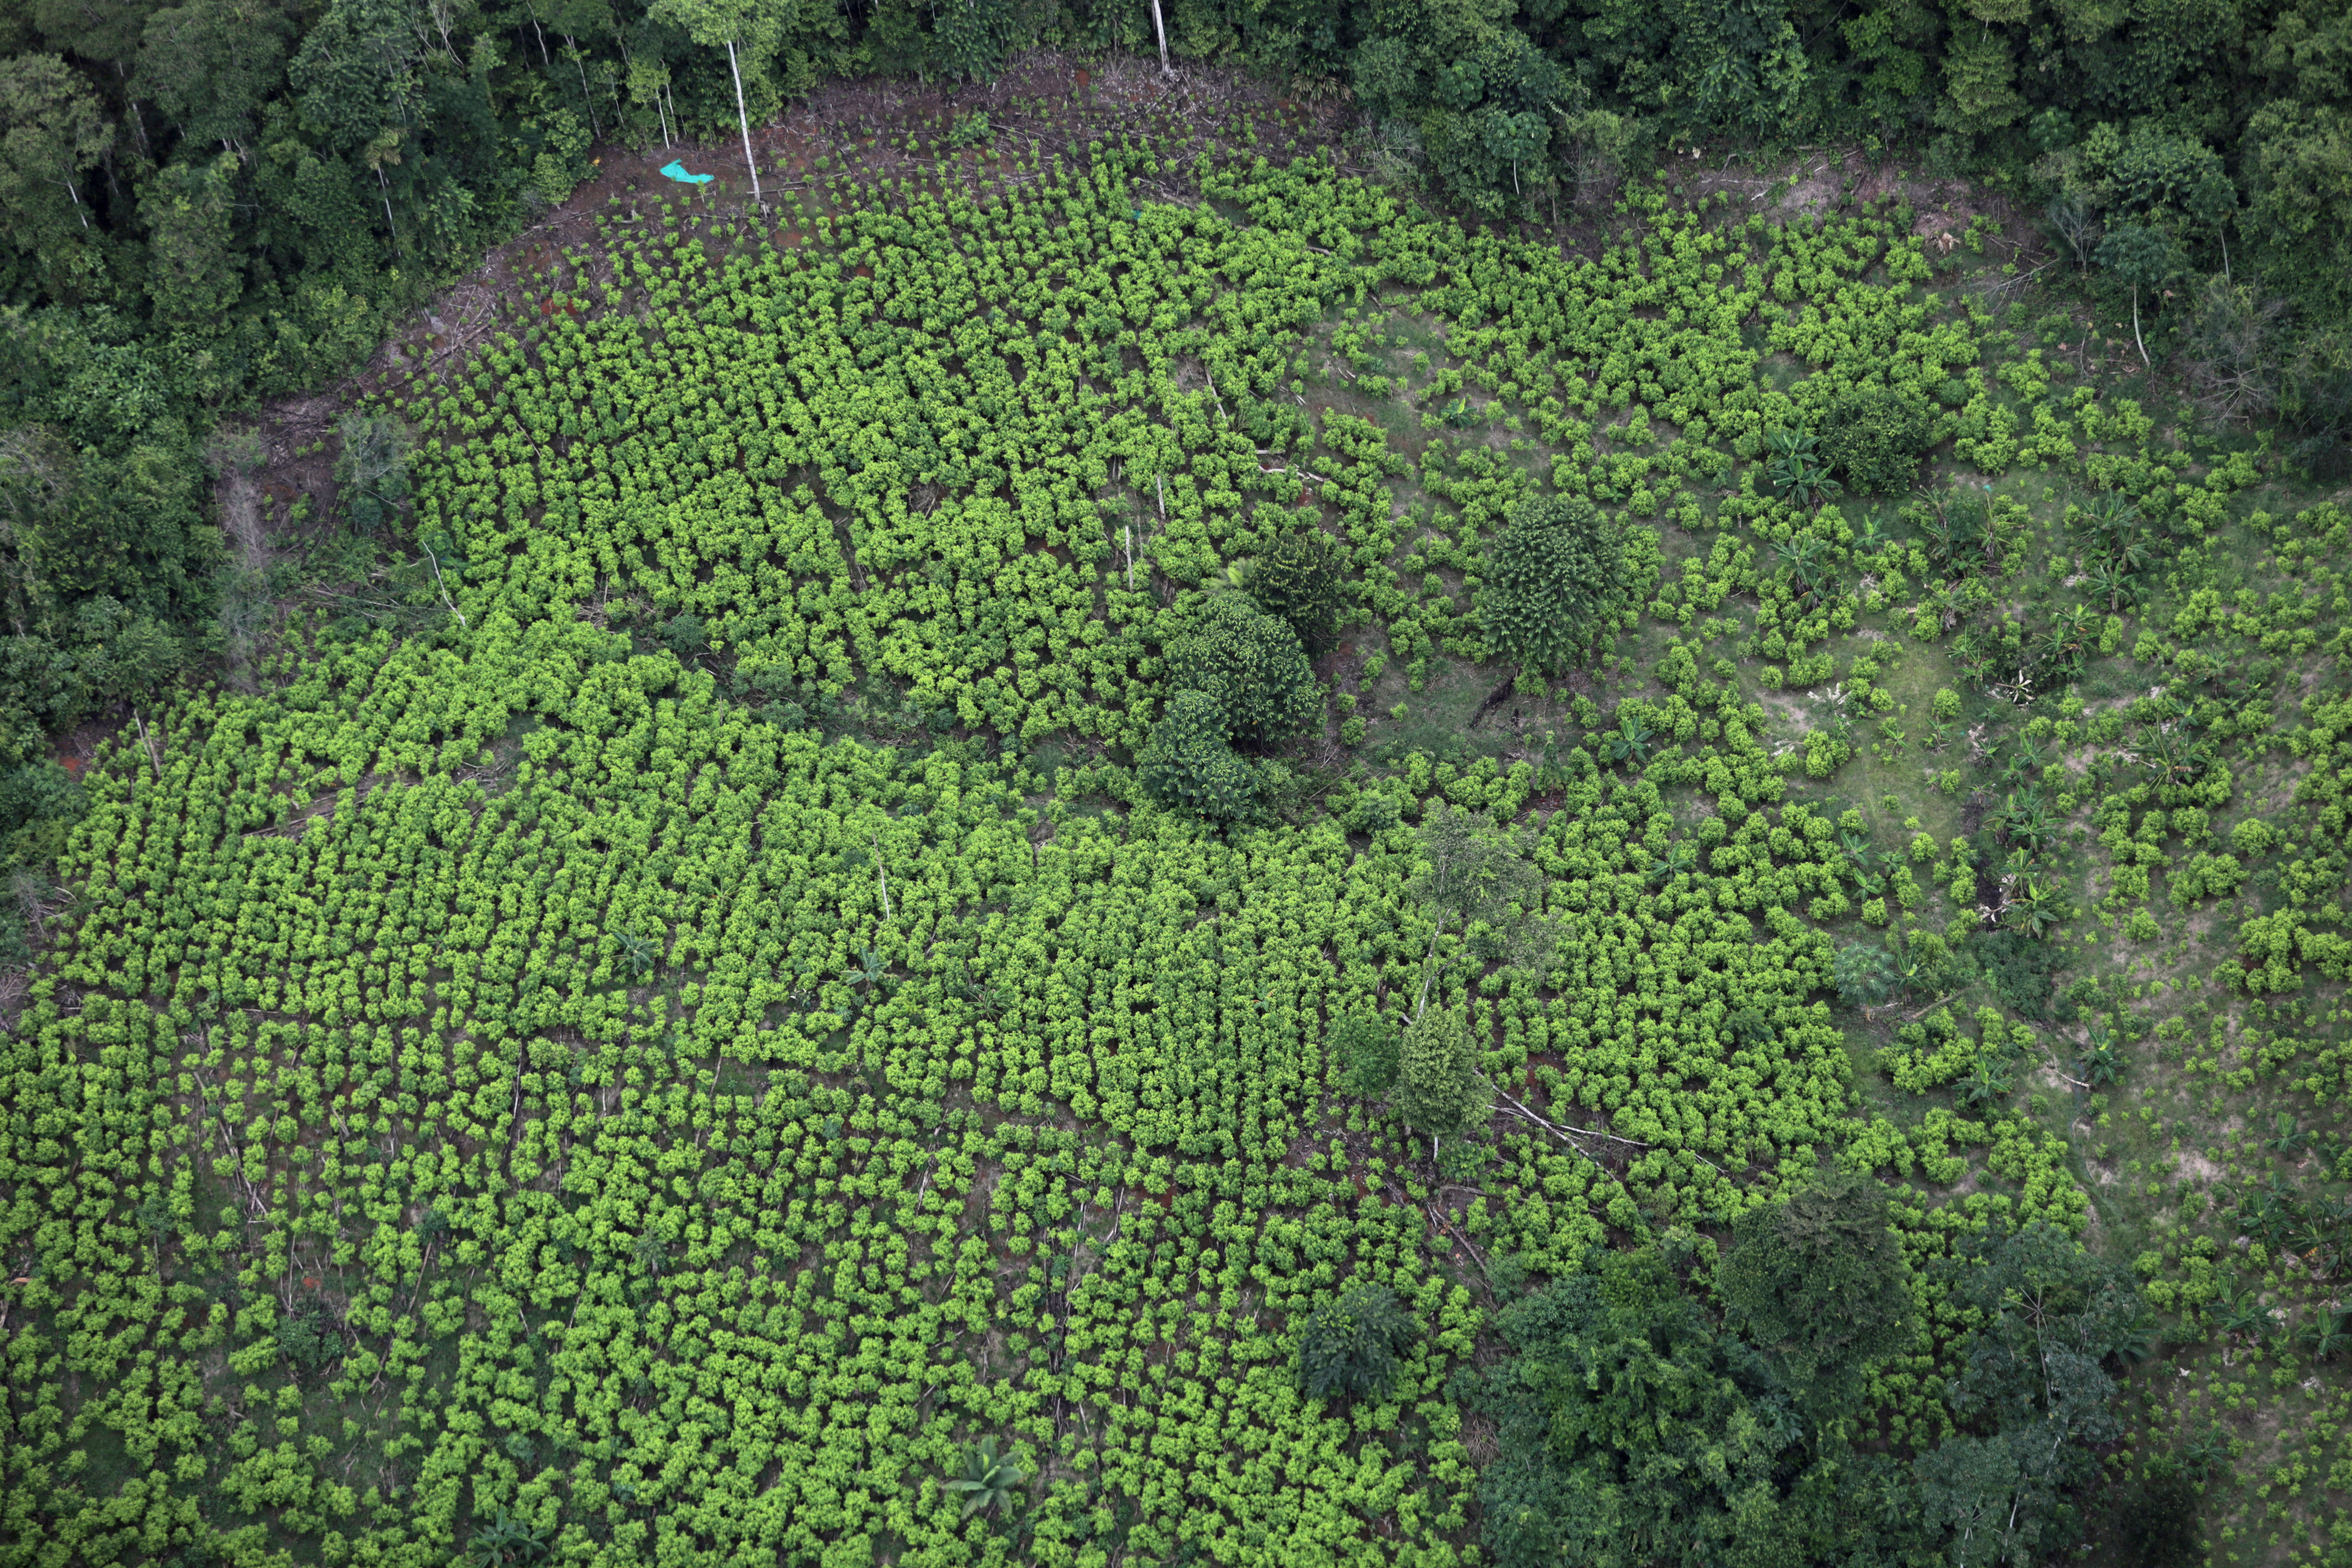 Ariel view of coca fields in Tumaco, Colombia, 26 de febrero, 2020. REUTERS/Luisa González